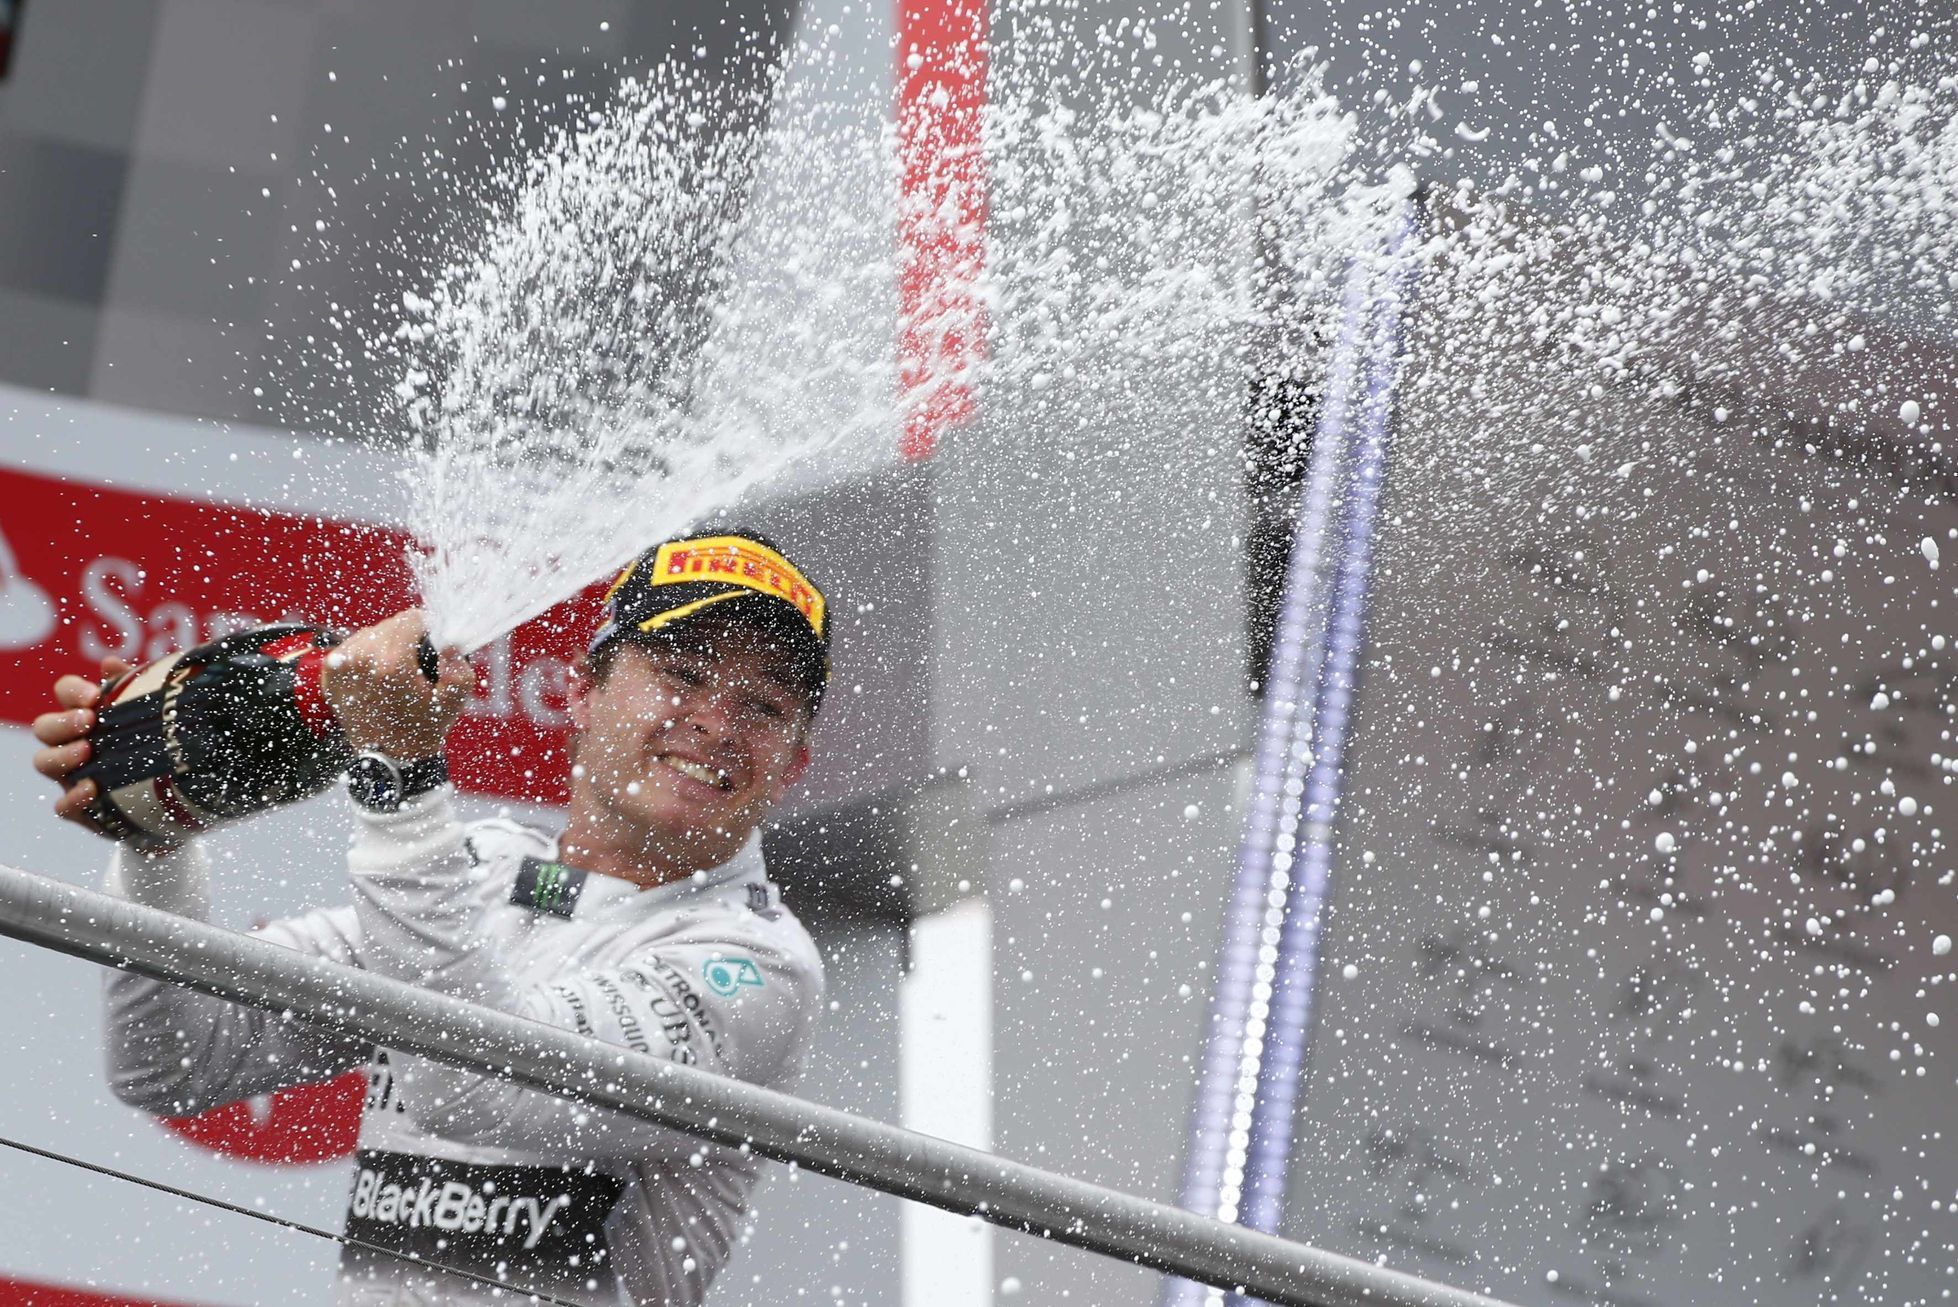 Mercedes Formula One driver Rosberg sprays champagne as he celebrates on podium after winningGerman F1 Grand Prix at Hockenheim